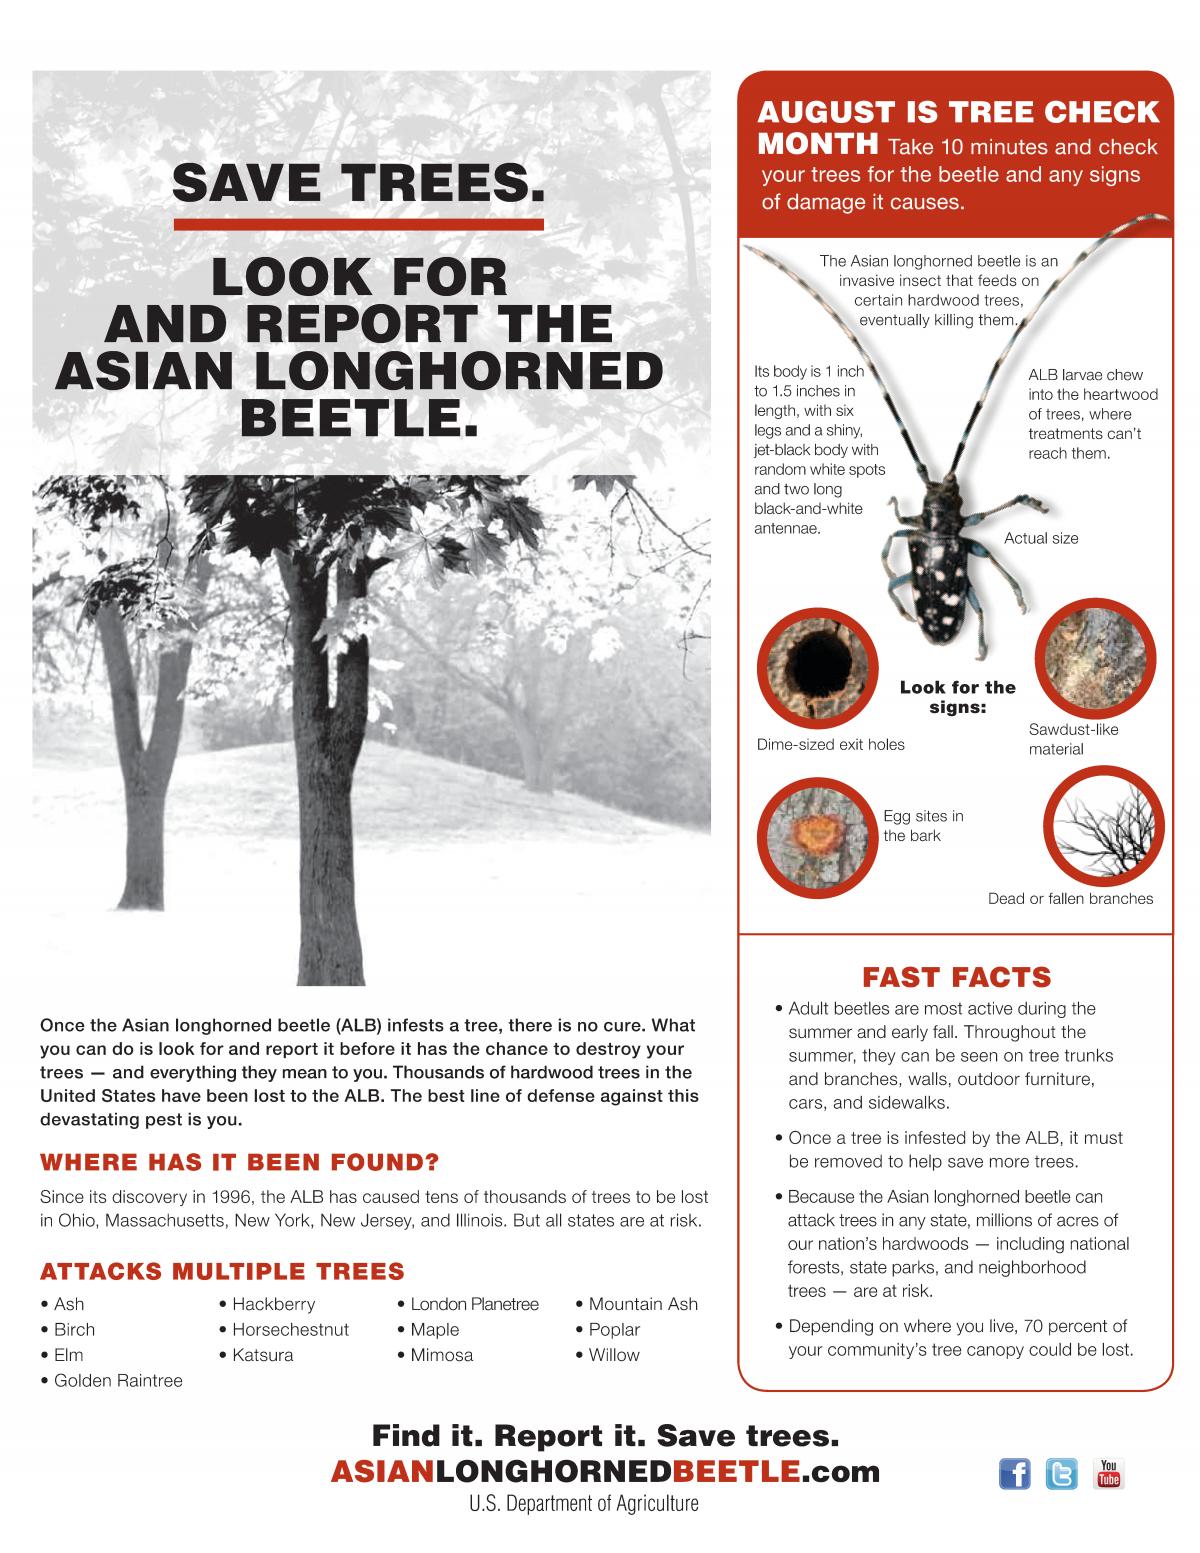 USDA Asian Longhorned Beetle Fact Sheet